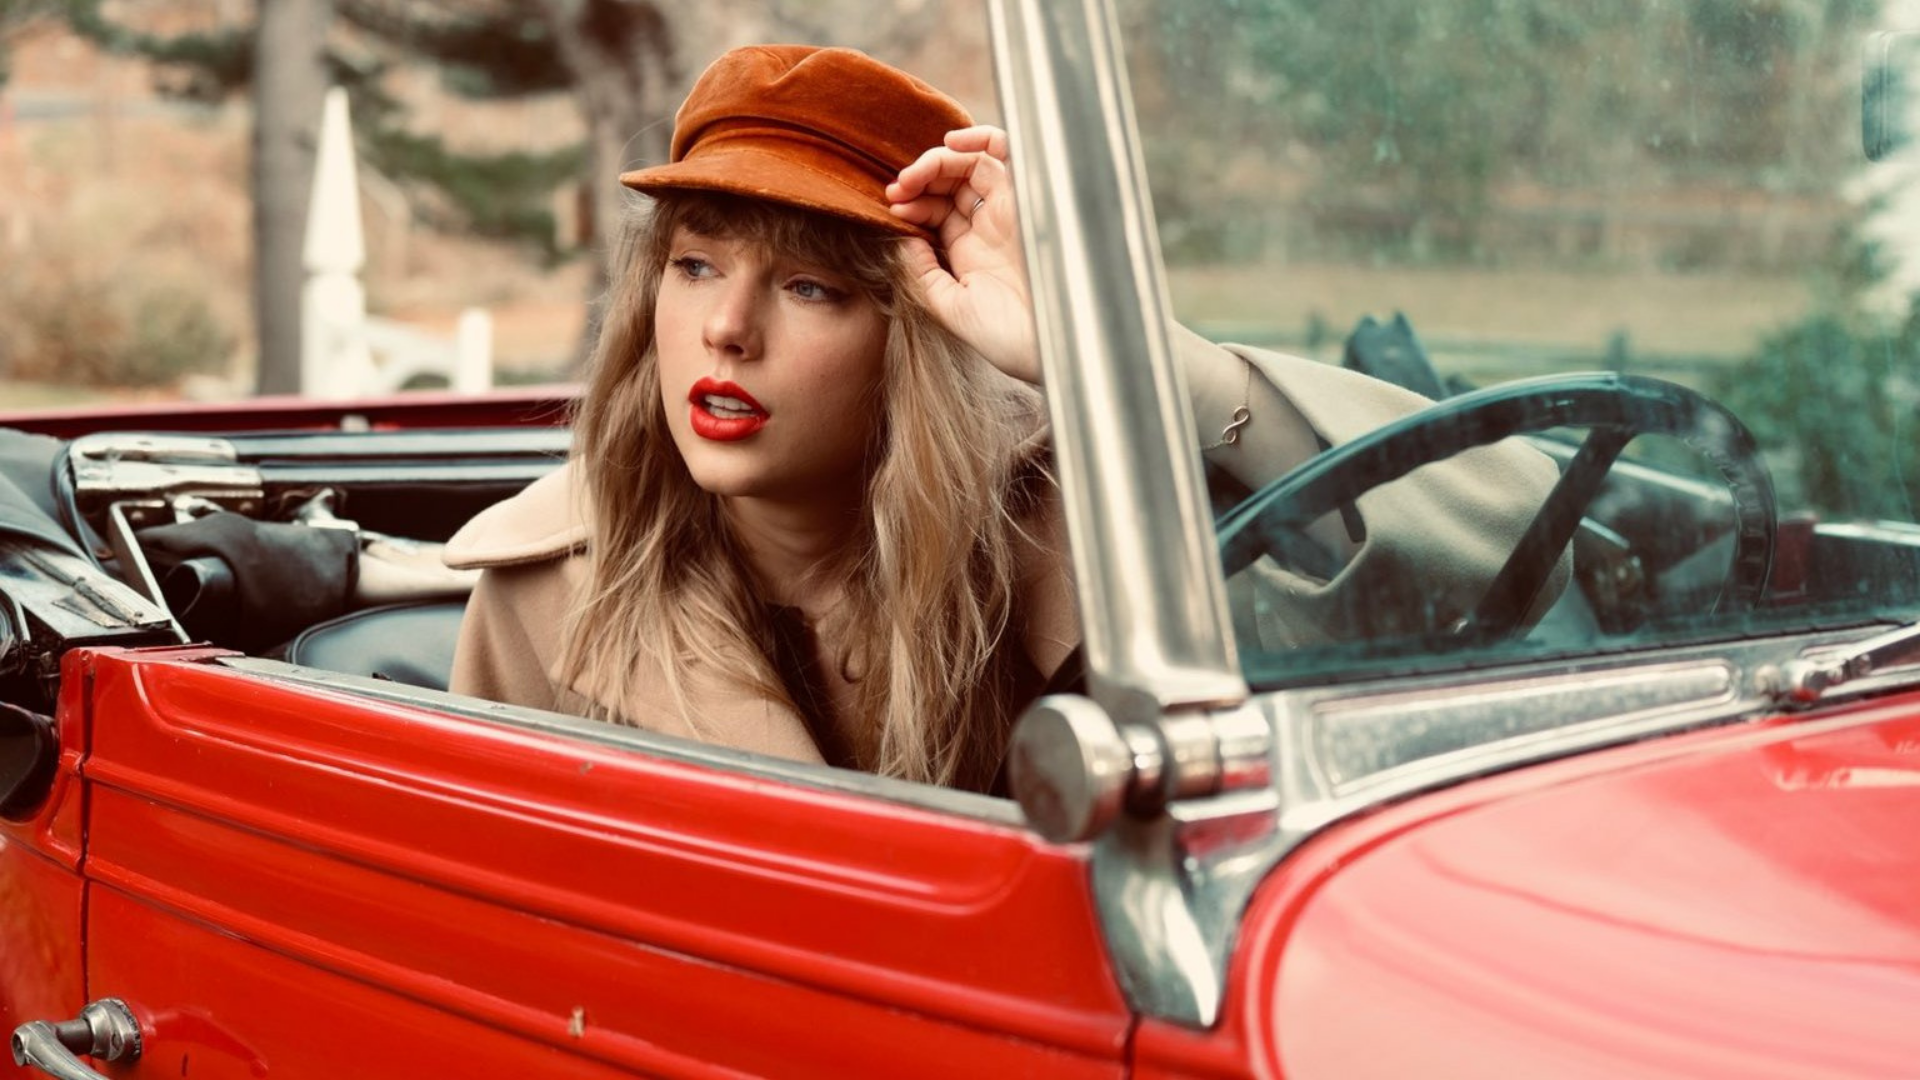 Taylor Swift Brasil Confira a tradução de todas as faixas From The Vault  do 1989 (Taylor's Version) - Taylor Swift Brasil